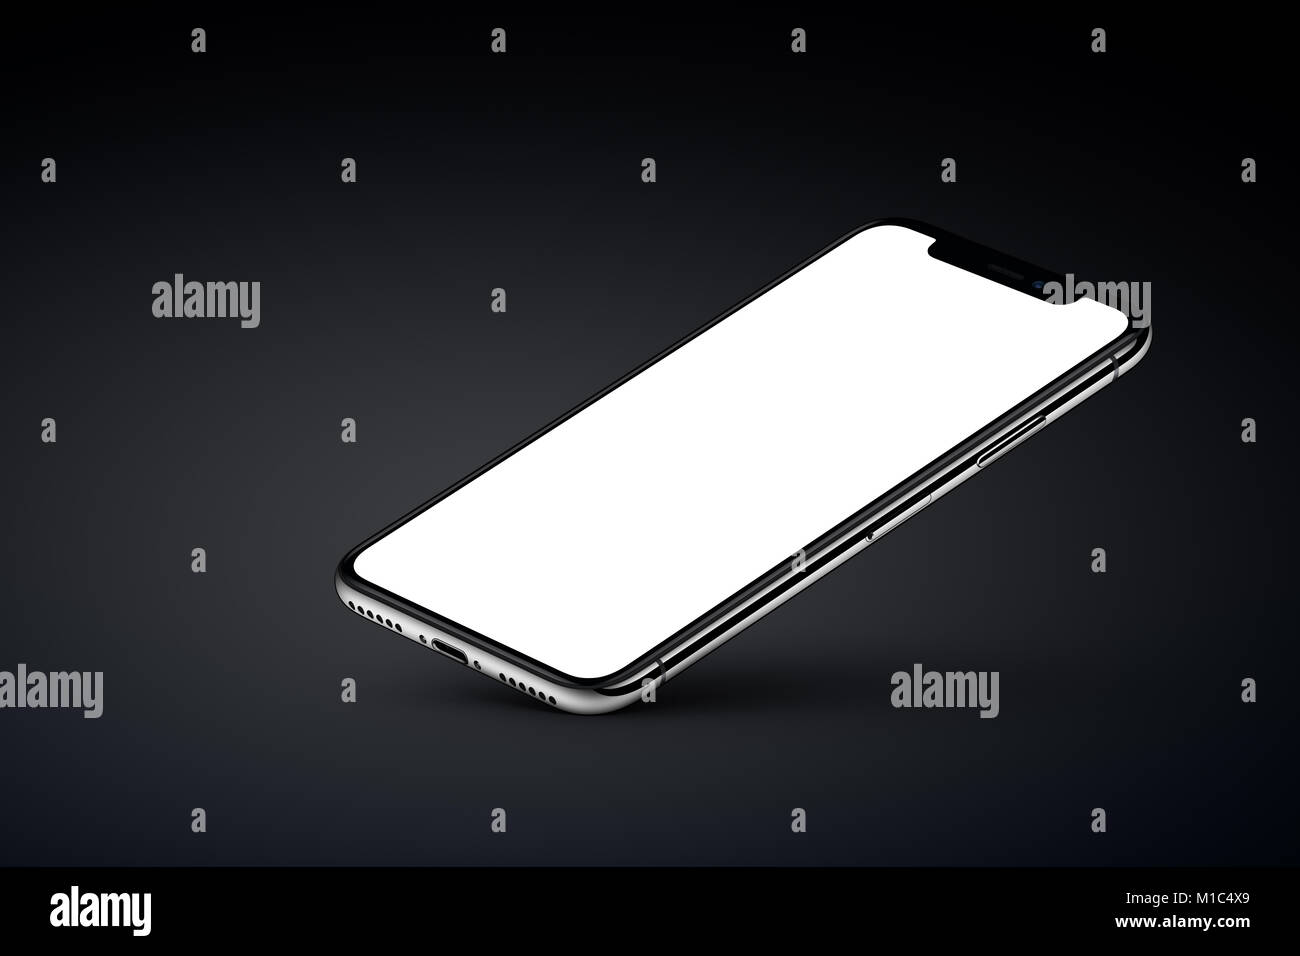 iPhone X. Perspective veiw smartphone mockup rests on one corner on black background. Stock Photo